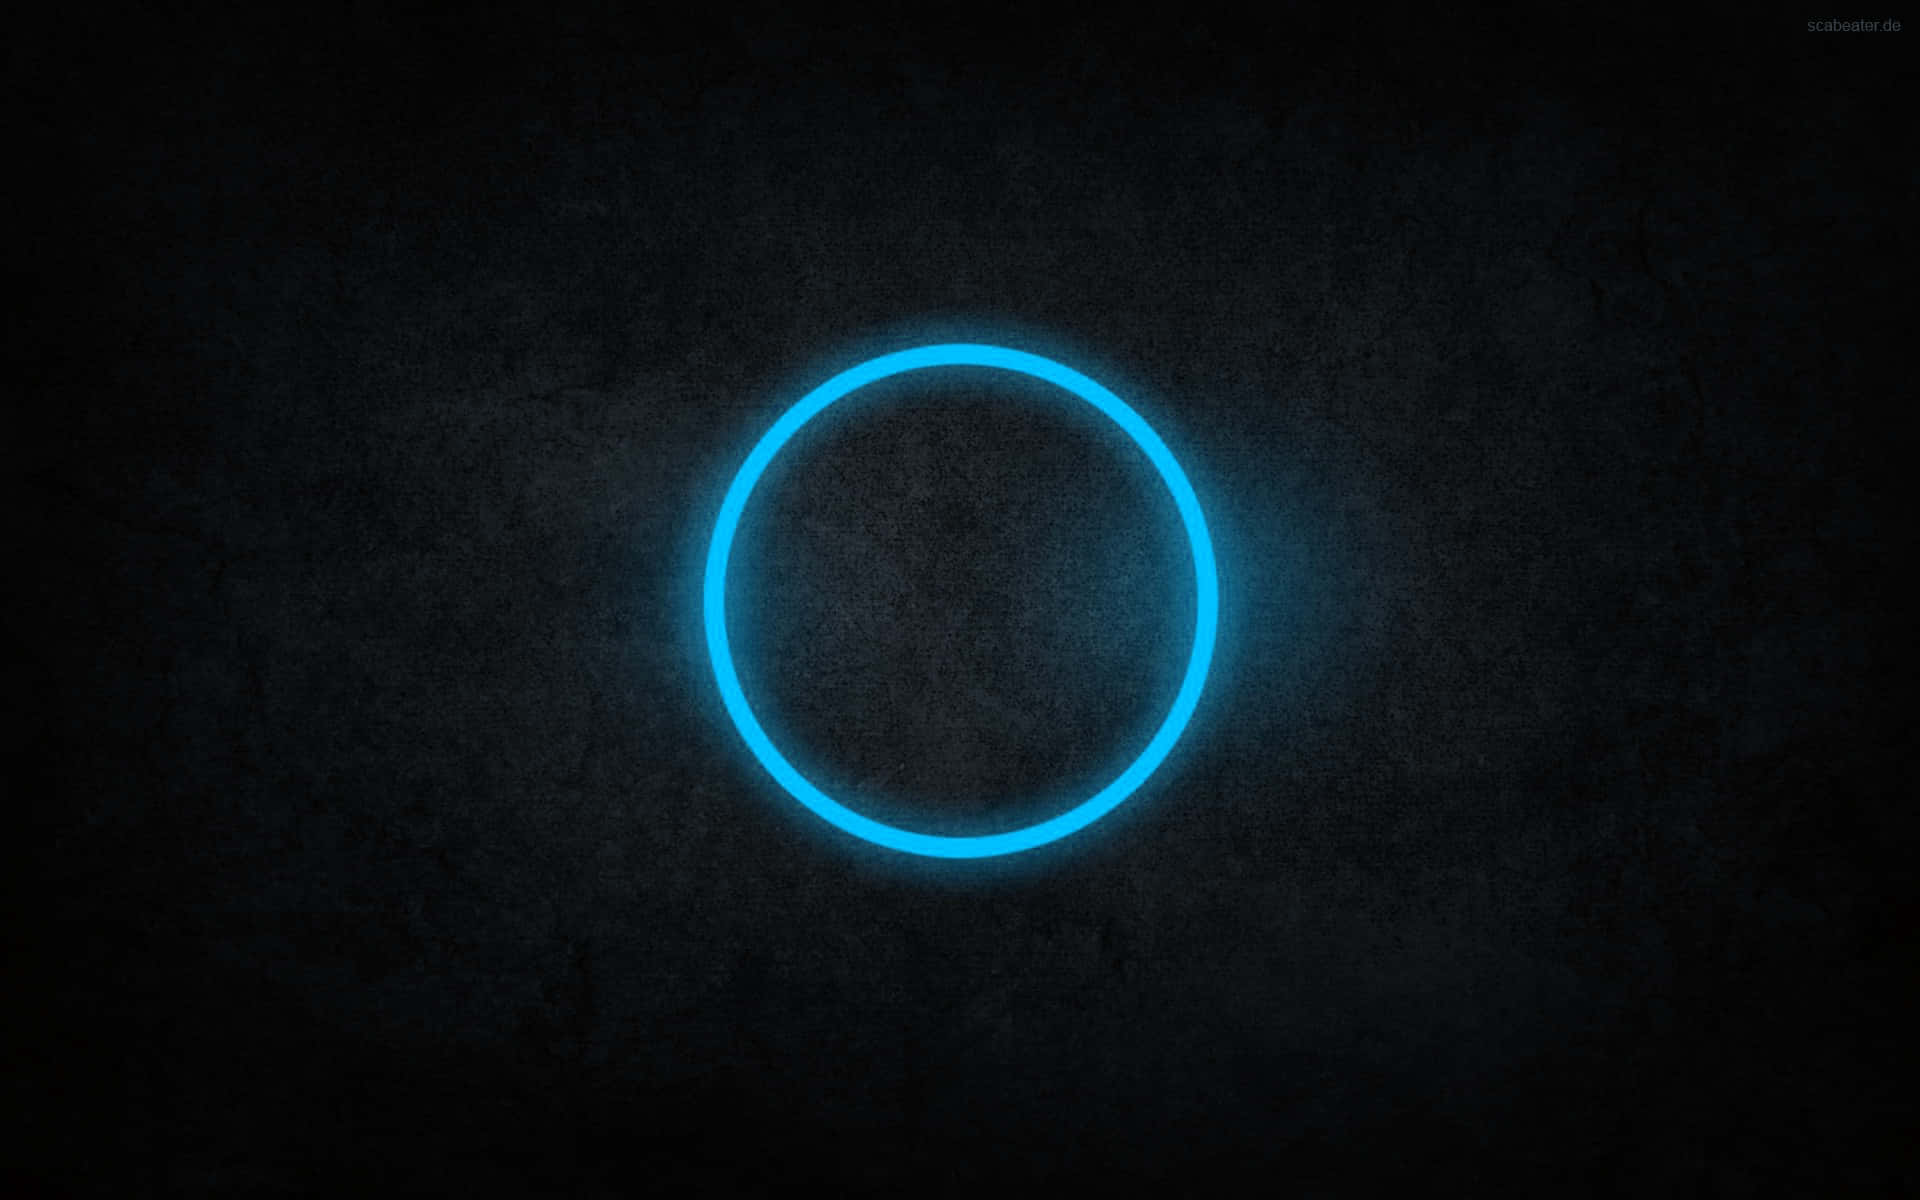 A minimalist blue abstract circle pattern.